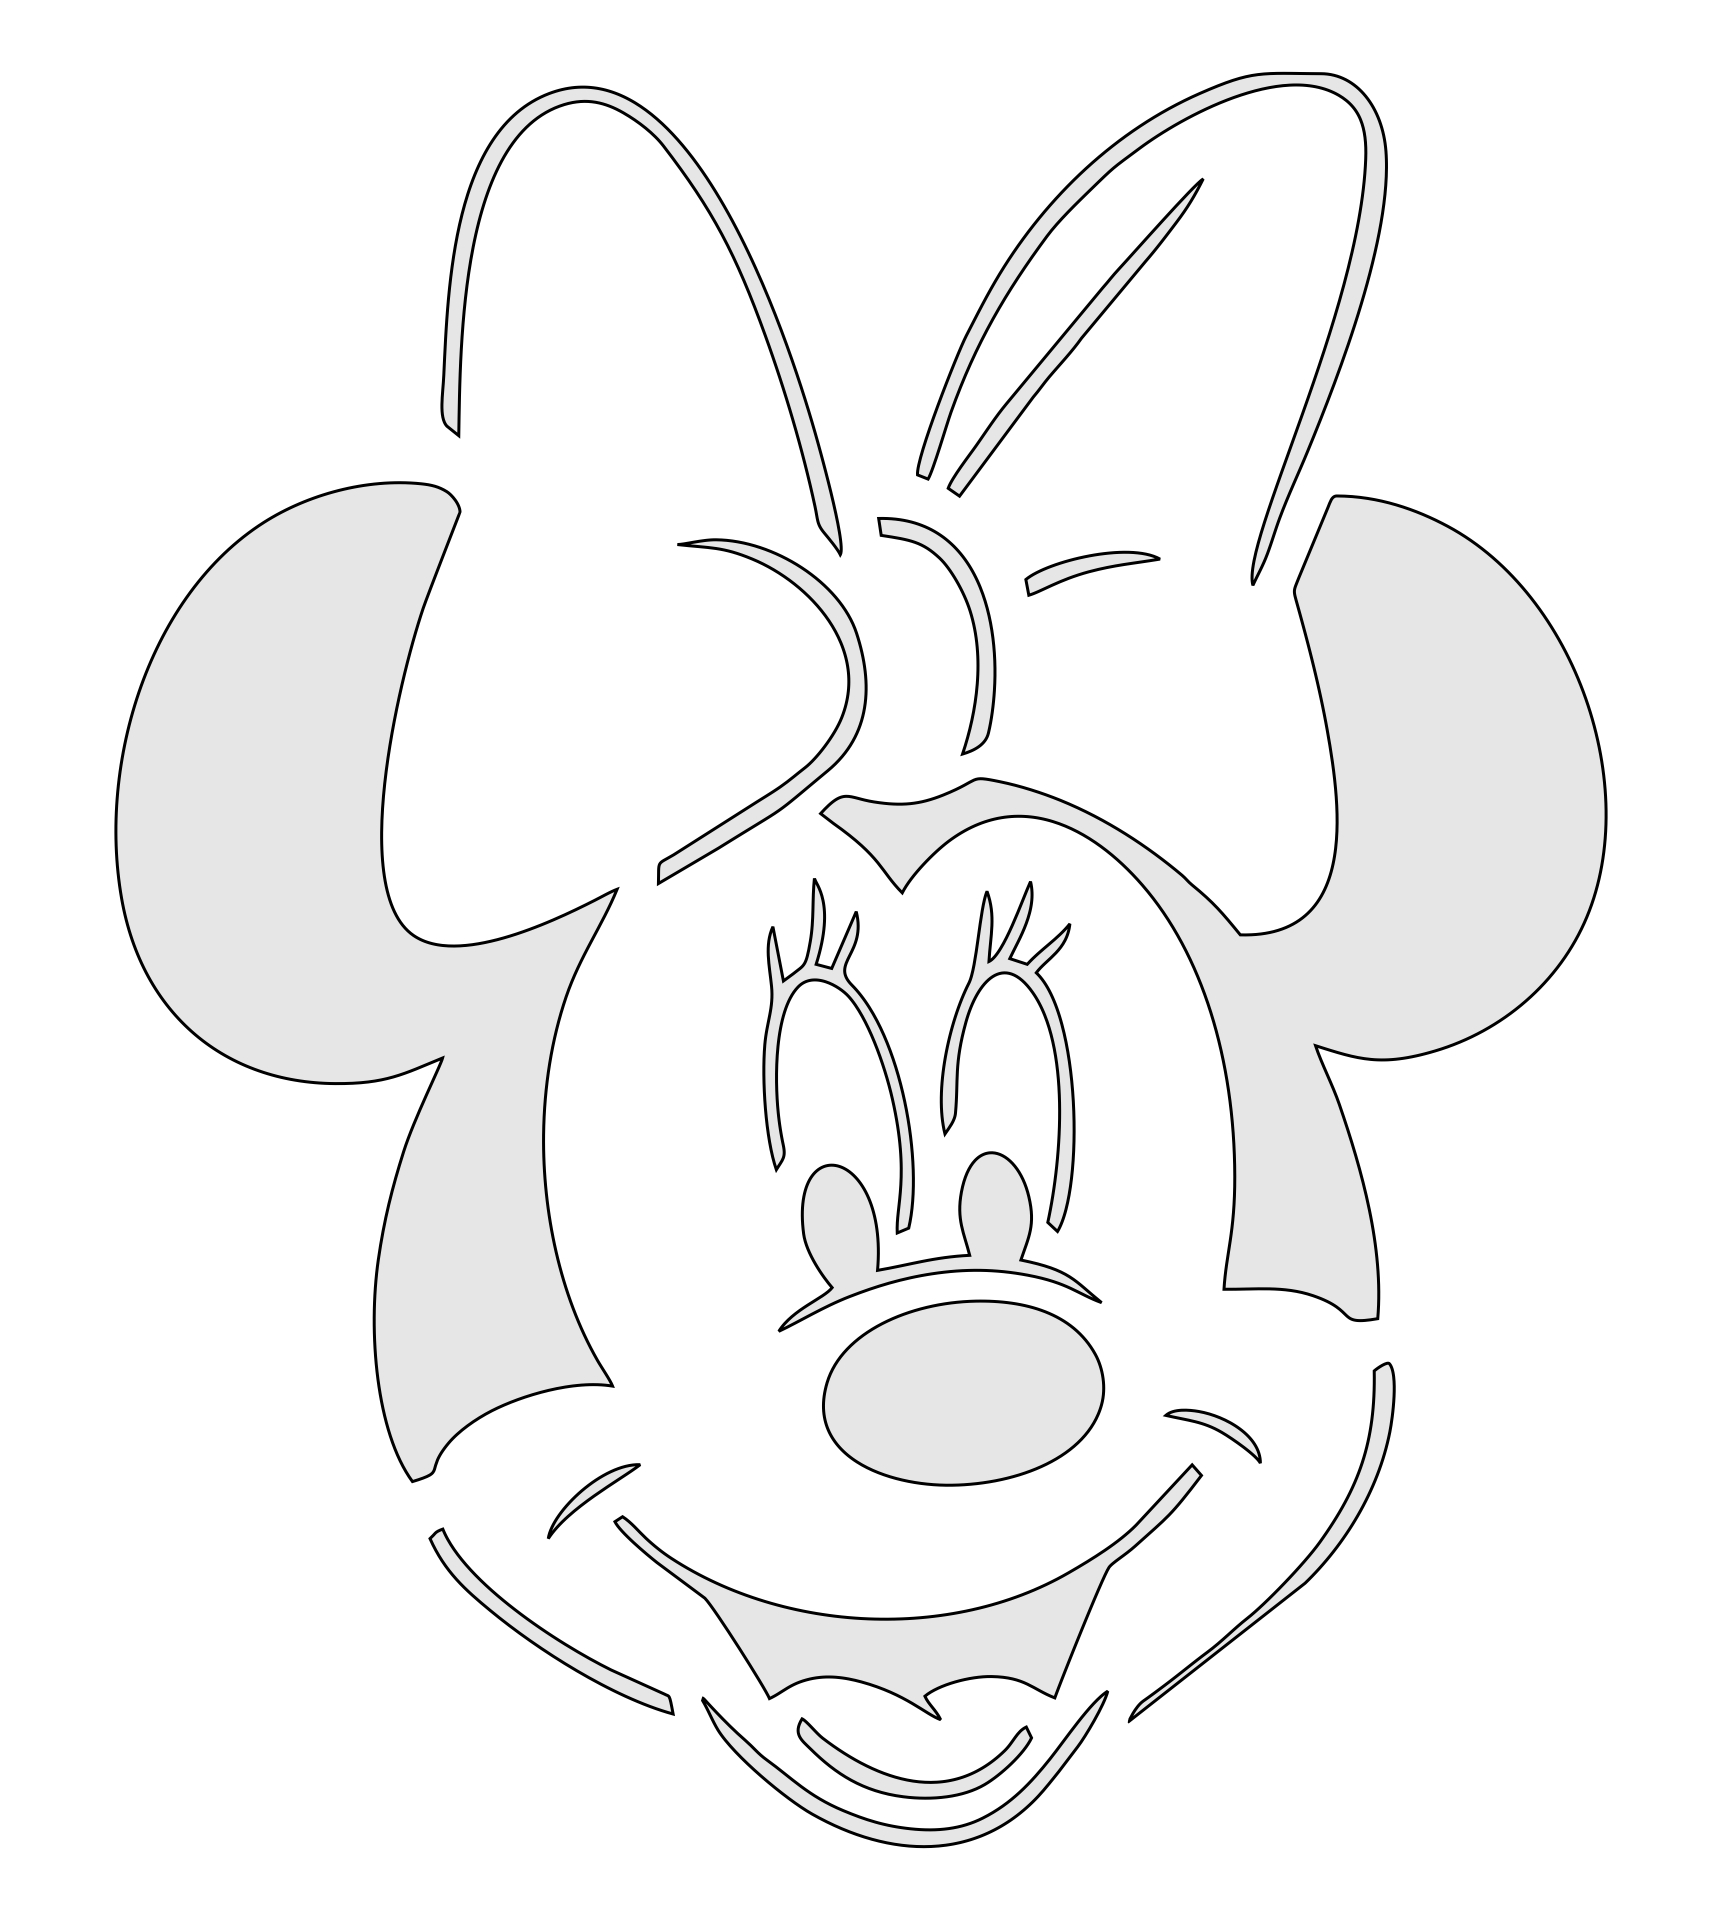 Minnie Mouse Stencil Printable